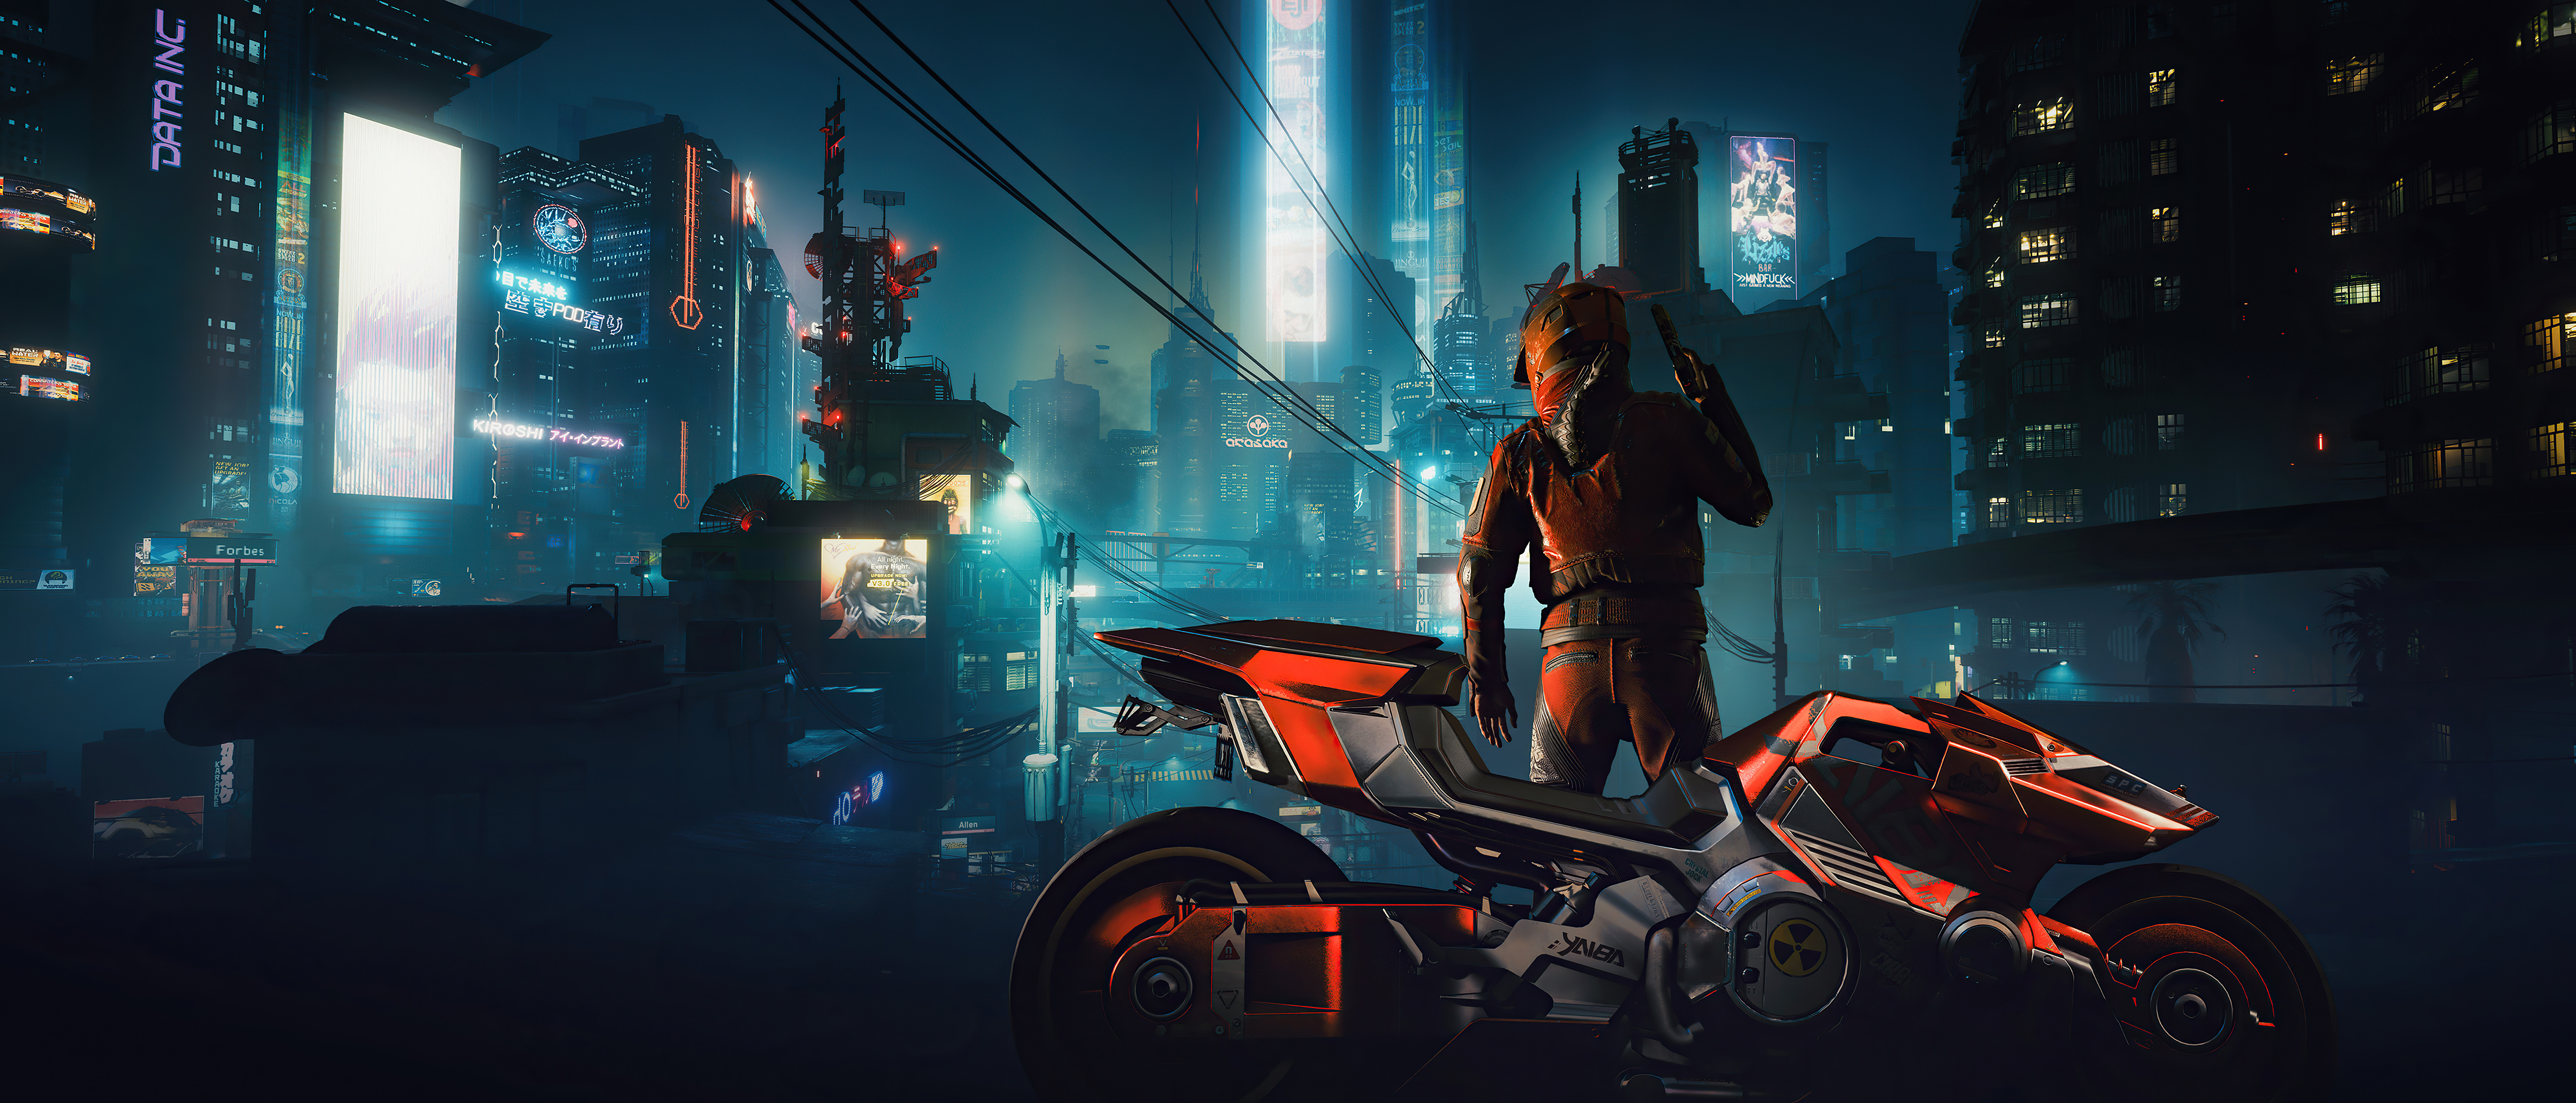 Wallpaper Cyberpunk City, Cyberpunk 2077, Cyberpunk, Science Fiction,  Digital Art, Background - Download Free Image